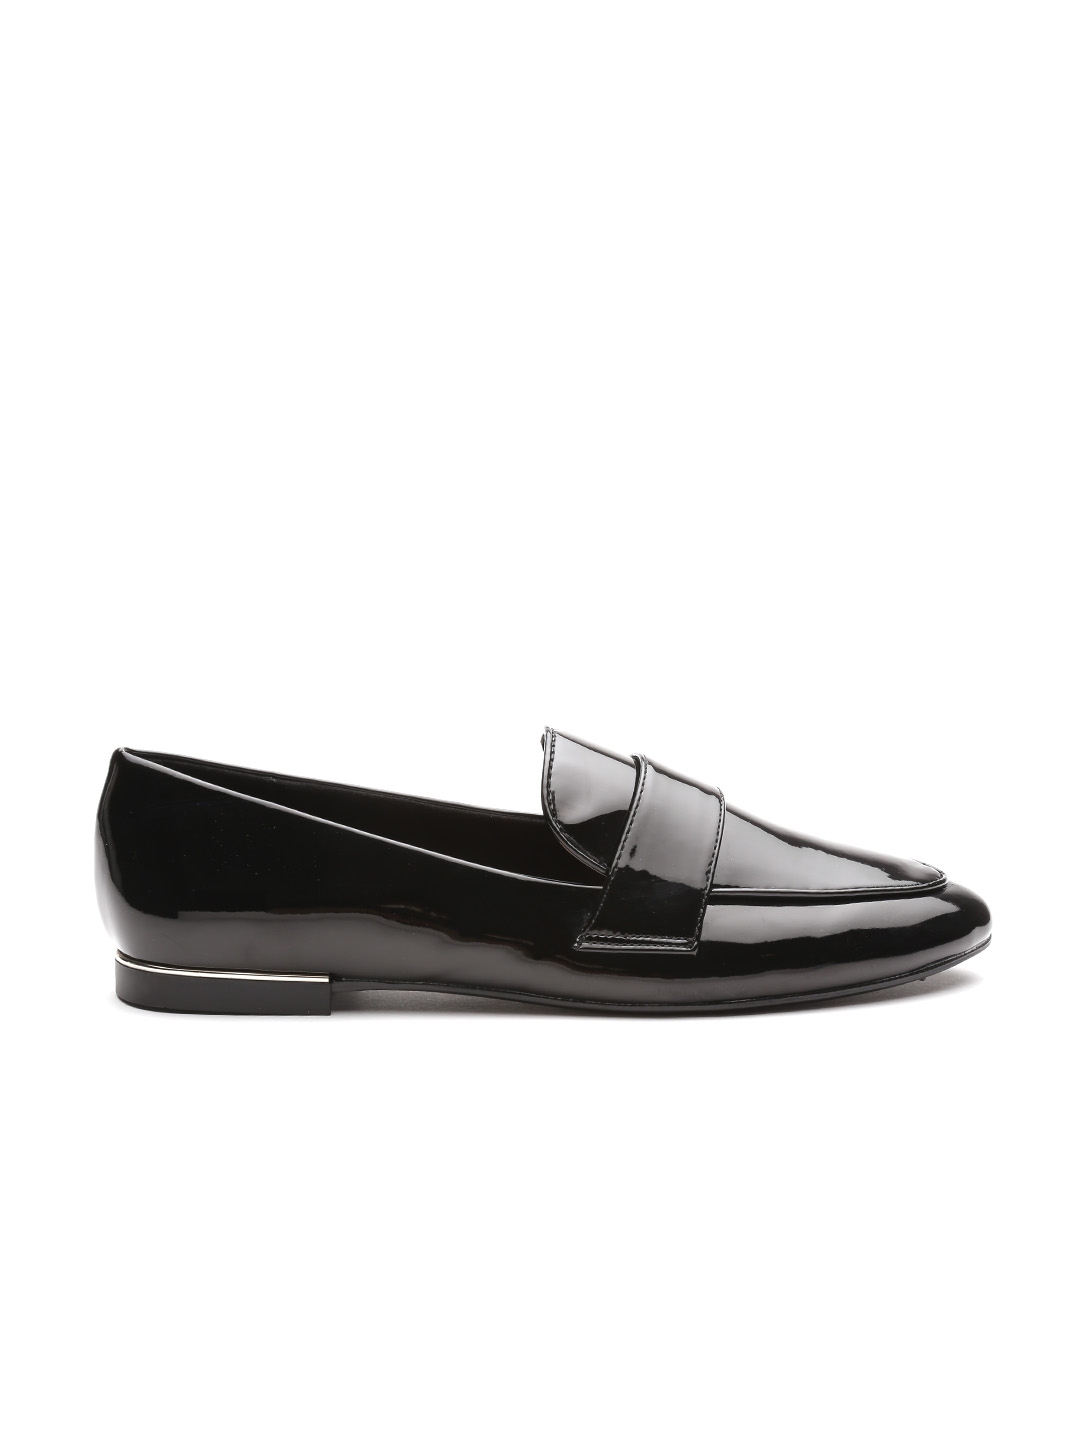 Buy MANGO Women Black Loafers - Casual Shoes for Women 2141661 | Myntra